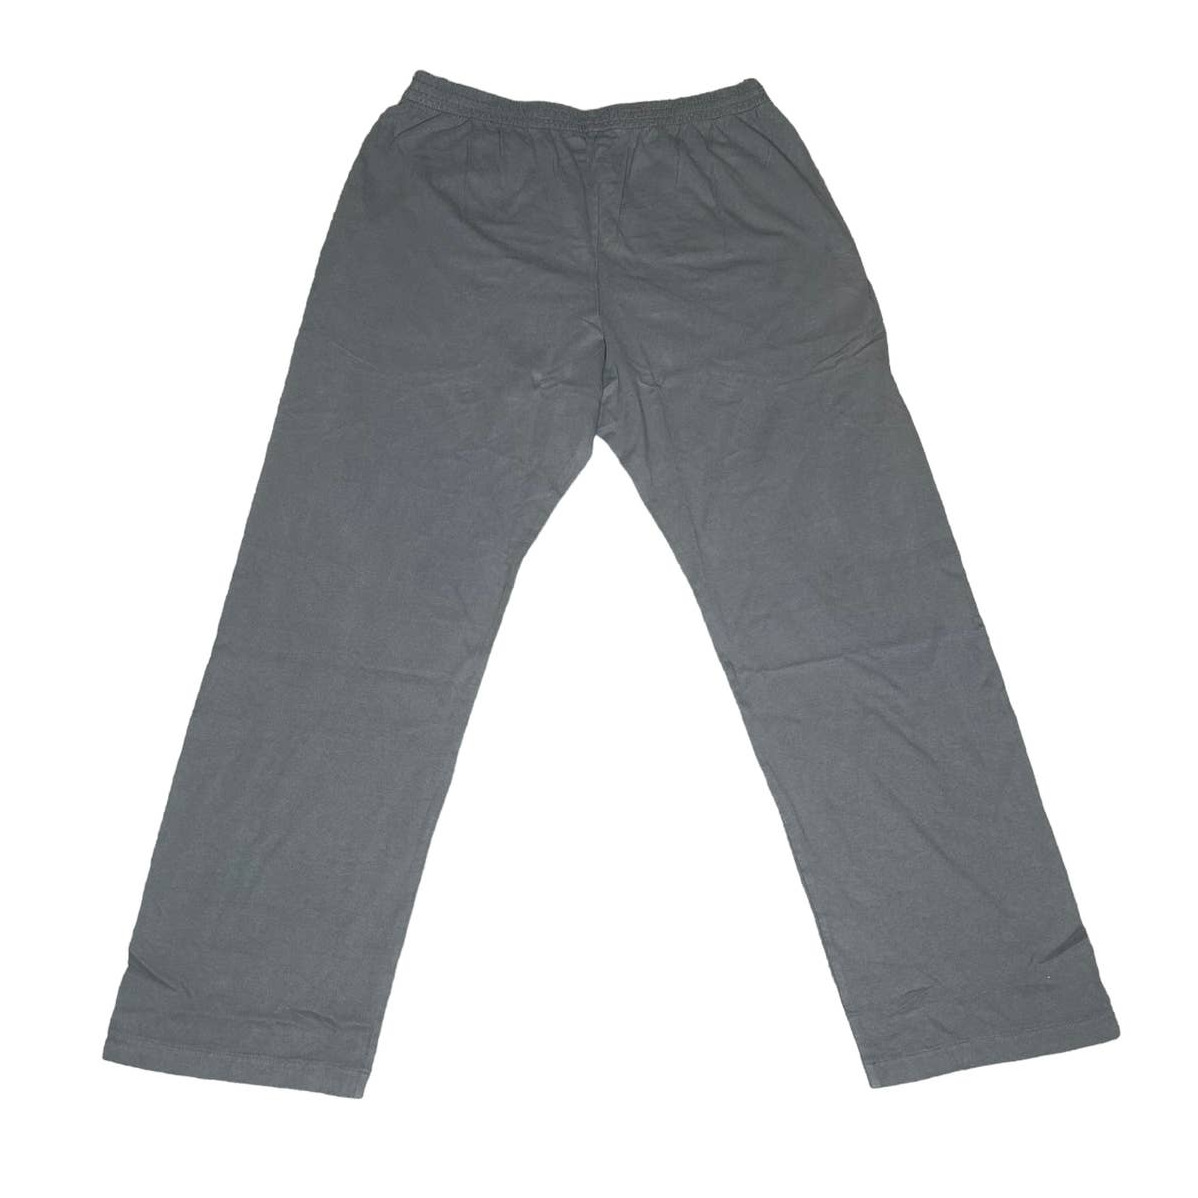 Yeezy Gap Unreleased Mainline Sweat Pants Size XL 34x32 Oversized